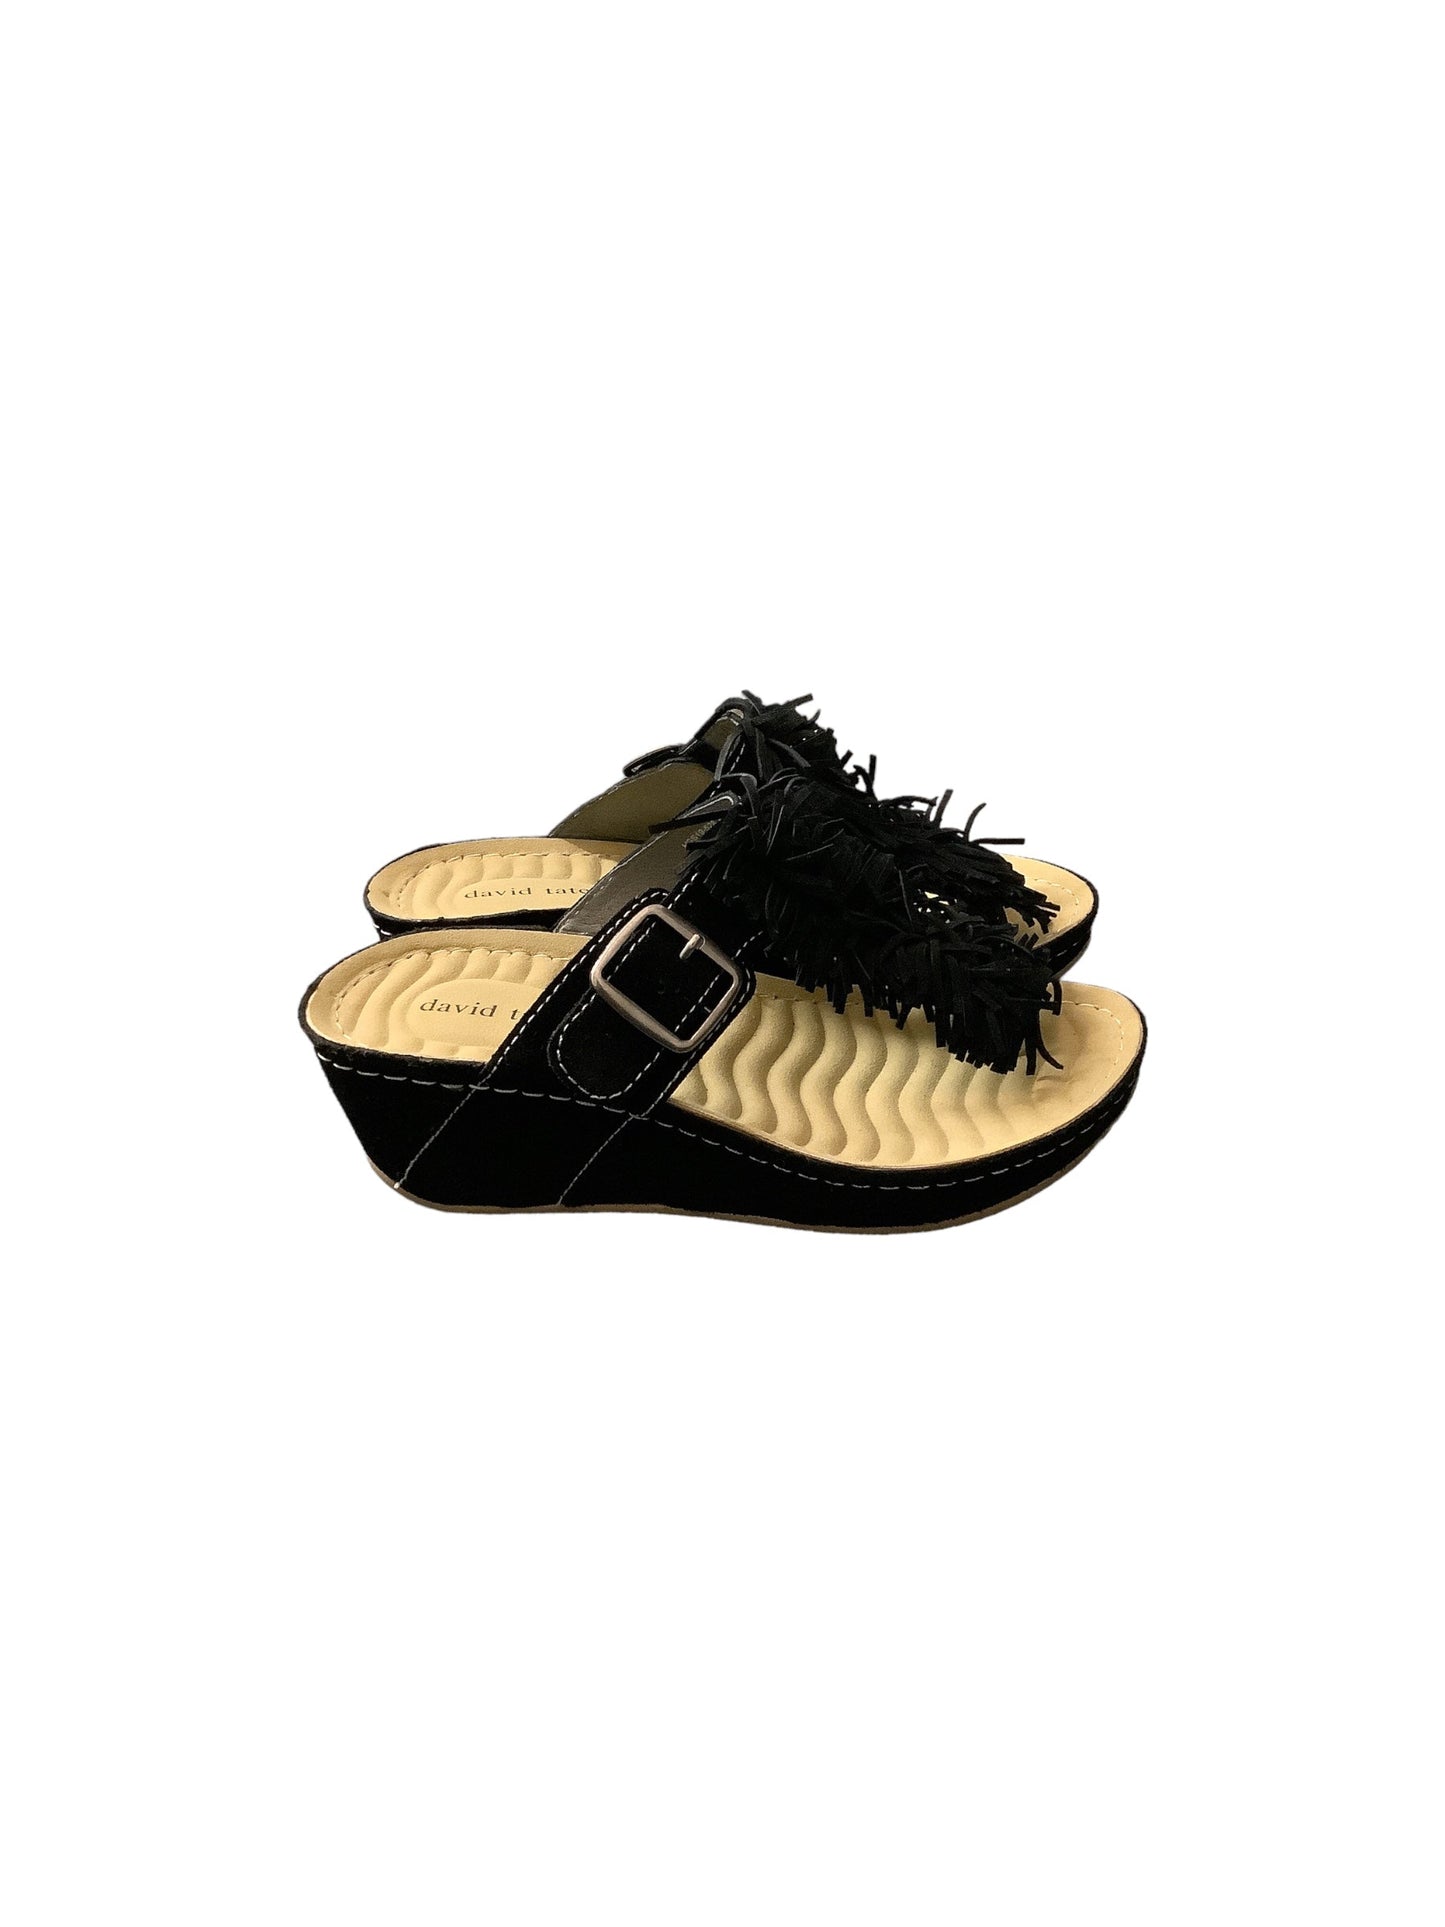 Black Sandals Heels Wedge Clothes Mentor, Size 7